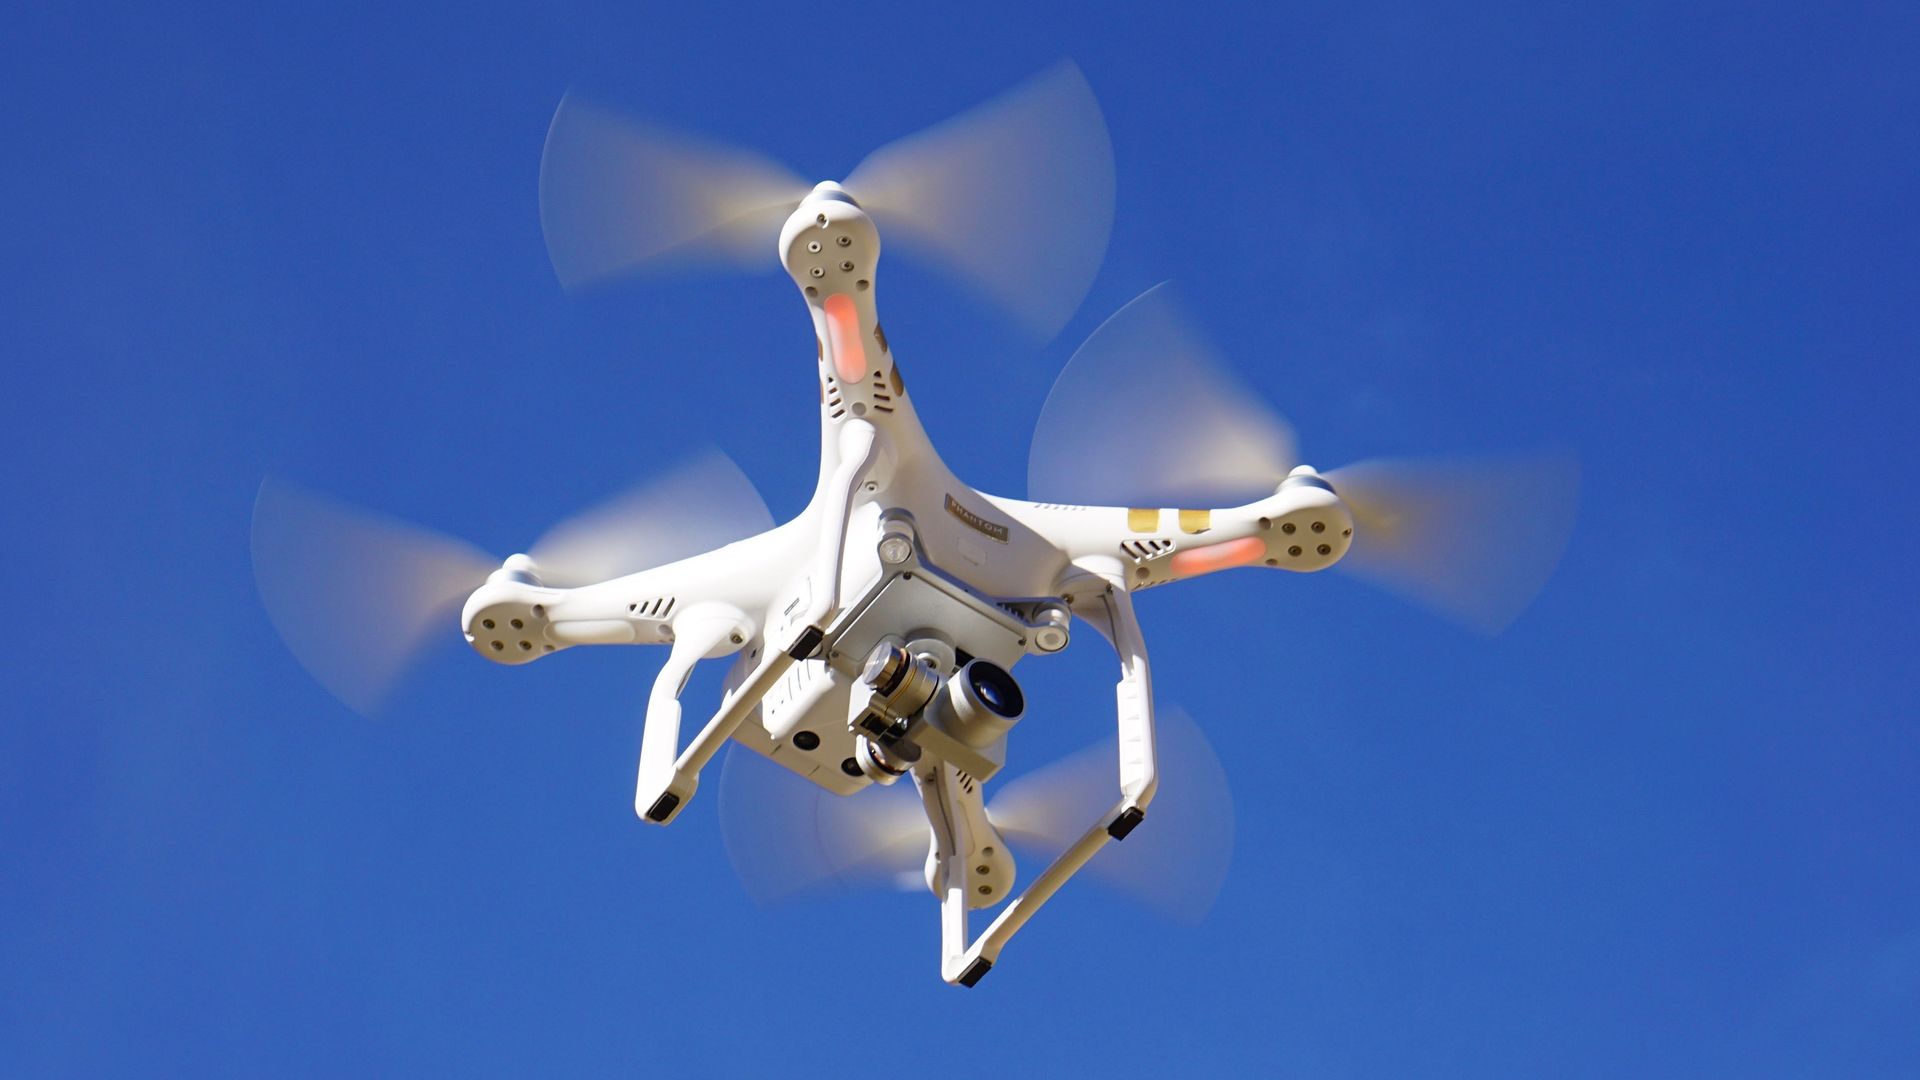 Drones - The Next Generation of Information Warfare